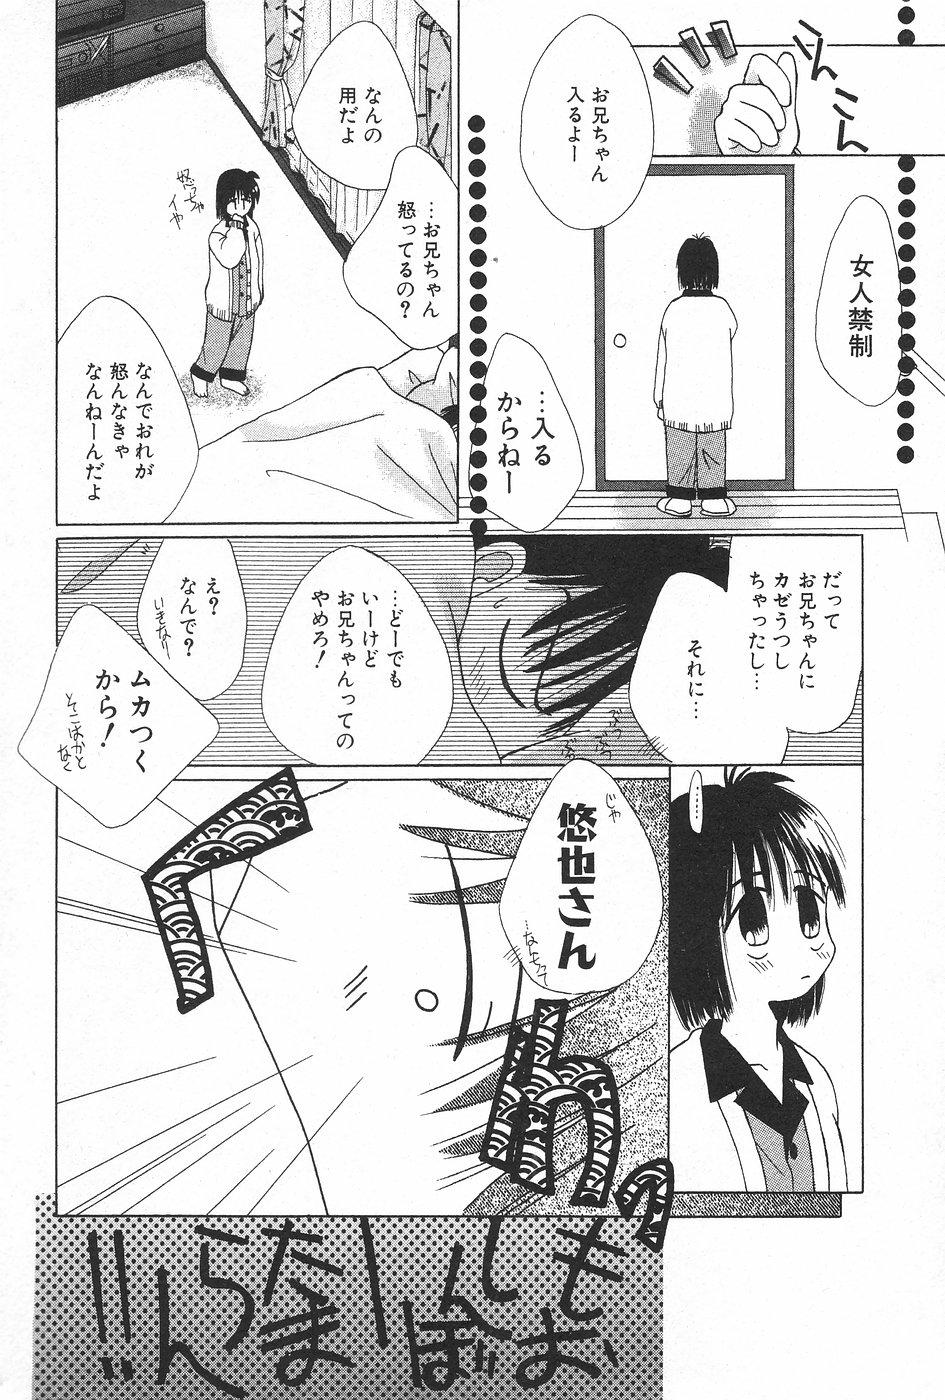 Manga Hotmilk 1997-05 29